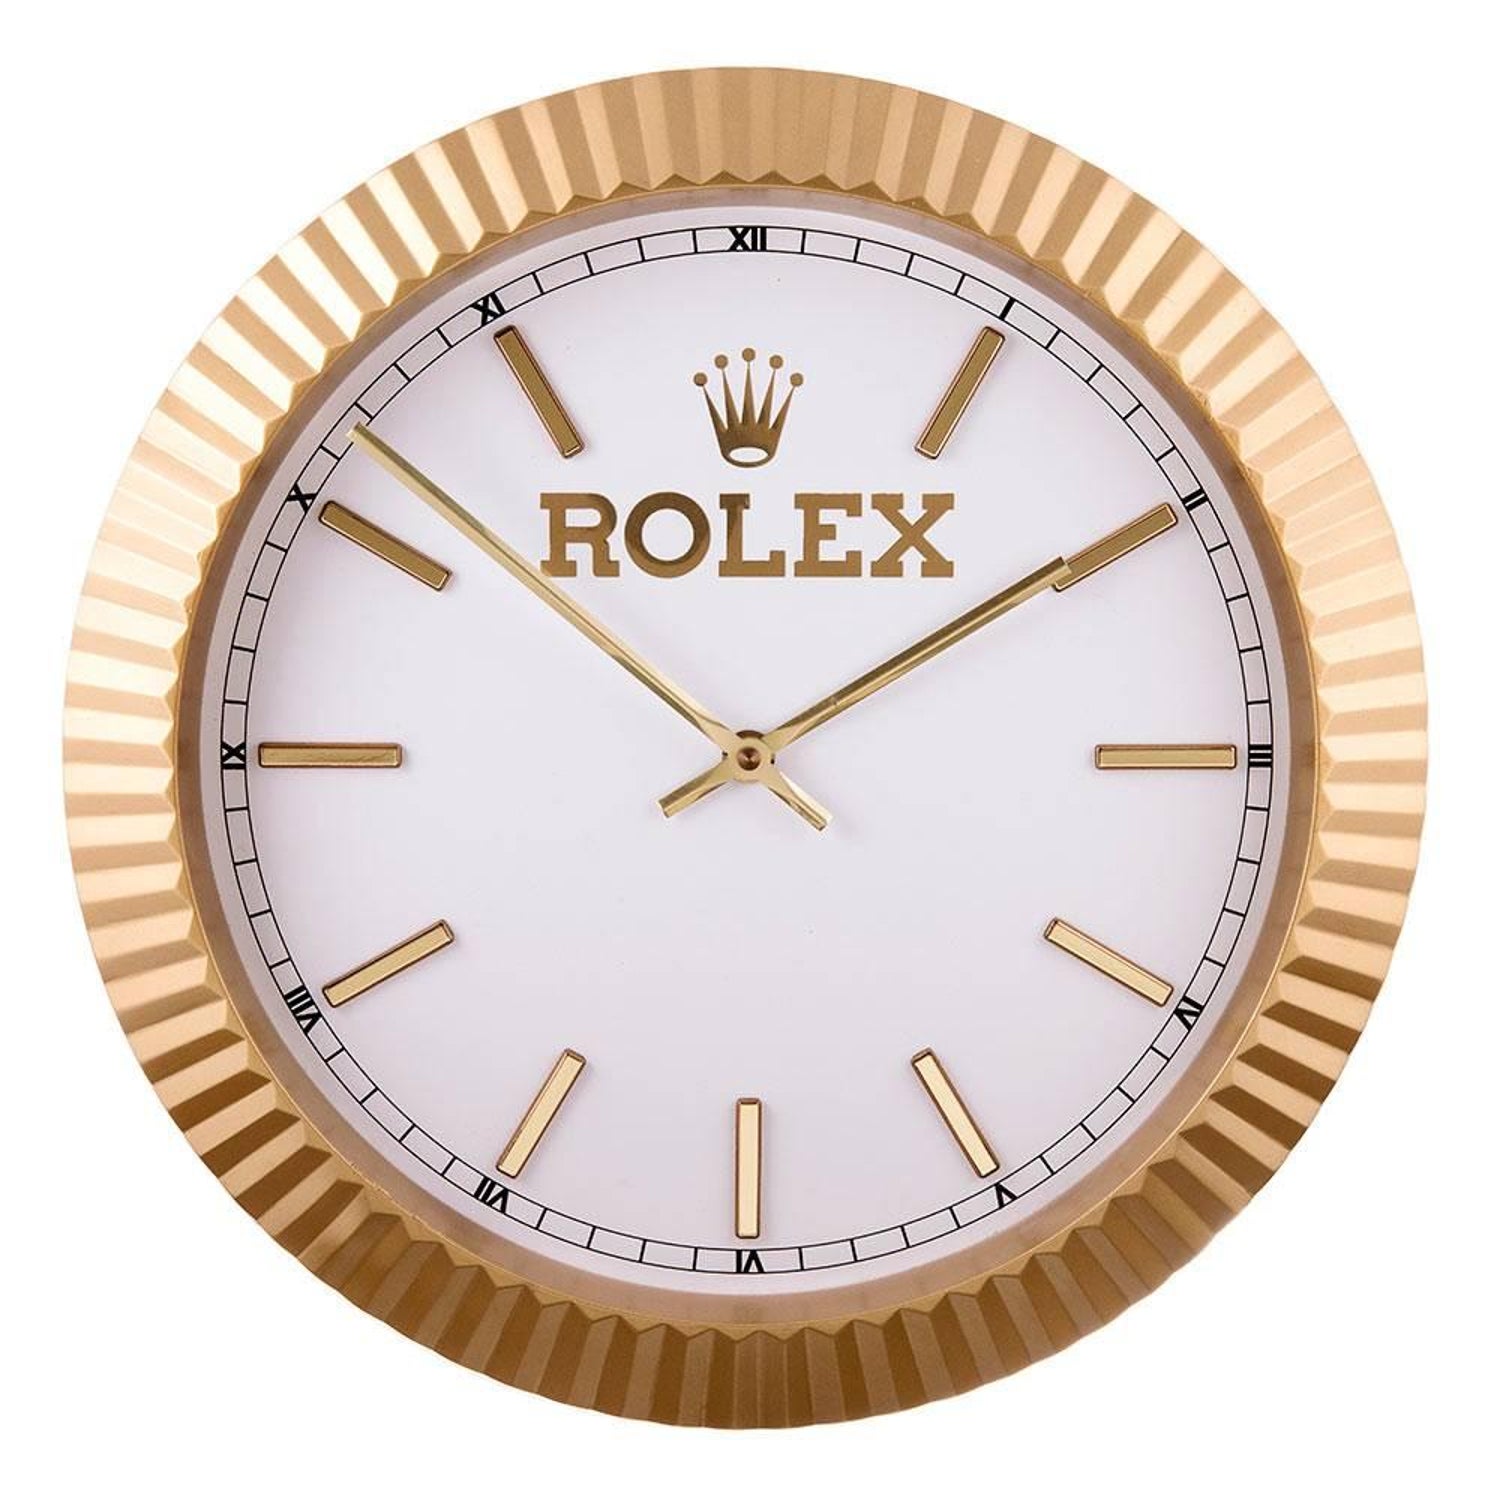 Rolex Wall Clock - For Sale on 1stDibs | original rolex wall clock price, rolex  clock for sale, rolex tennis clock price